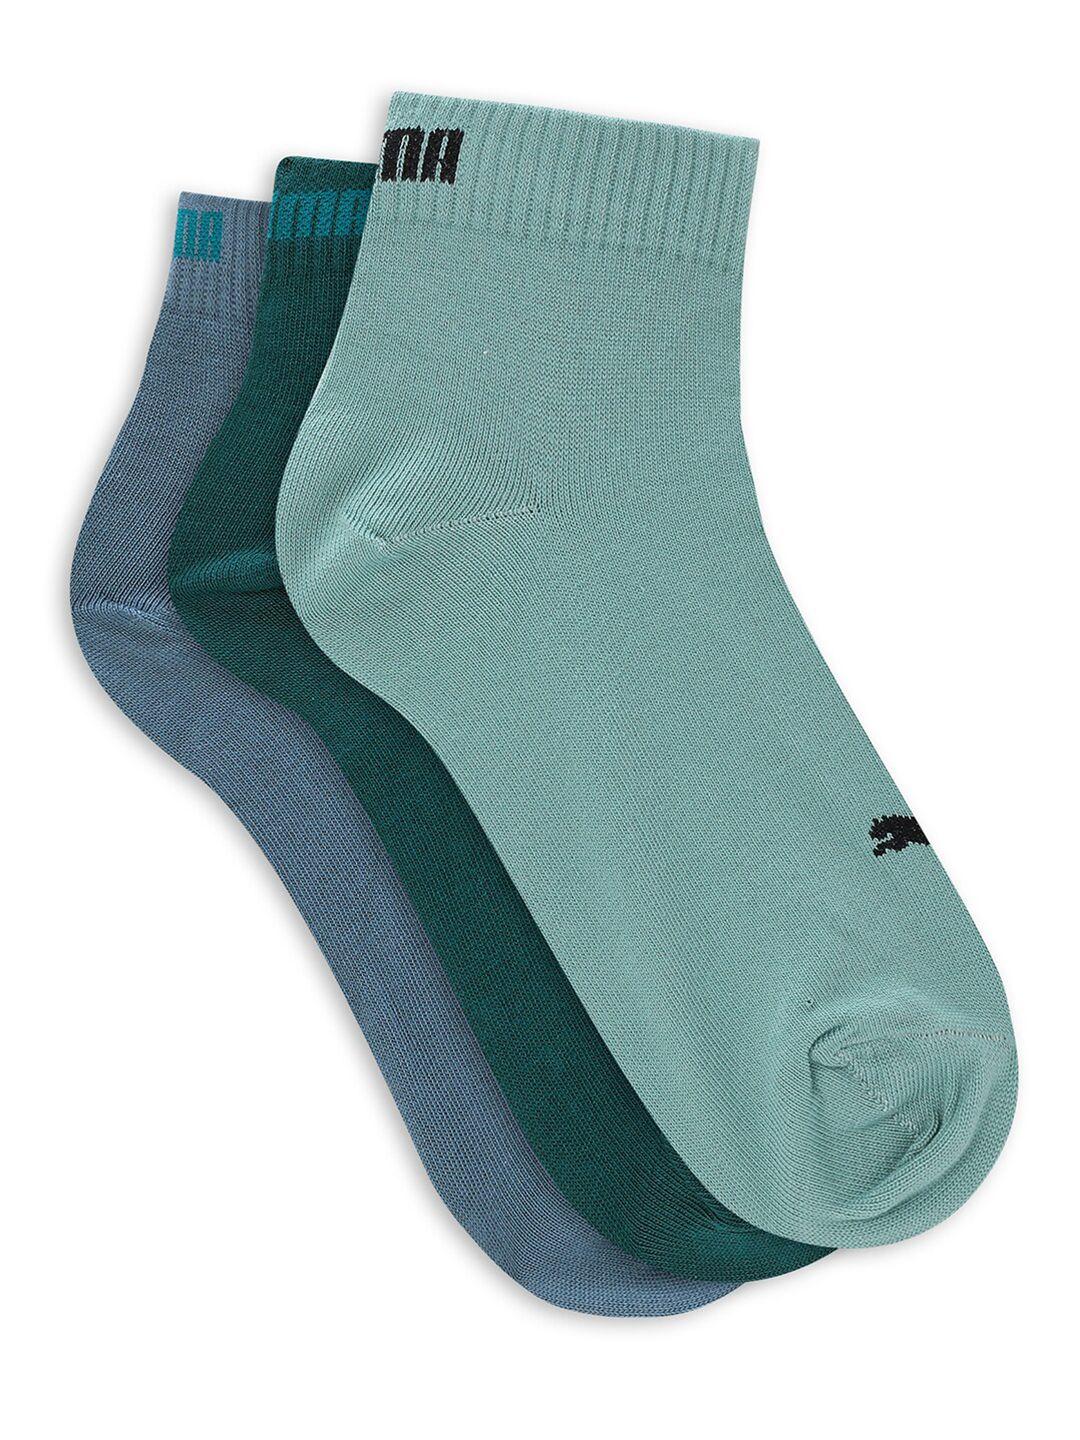 puma-quarter-plain-unisex-pack-of-3-ankle-length-cotton-socks